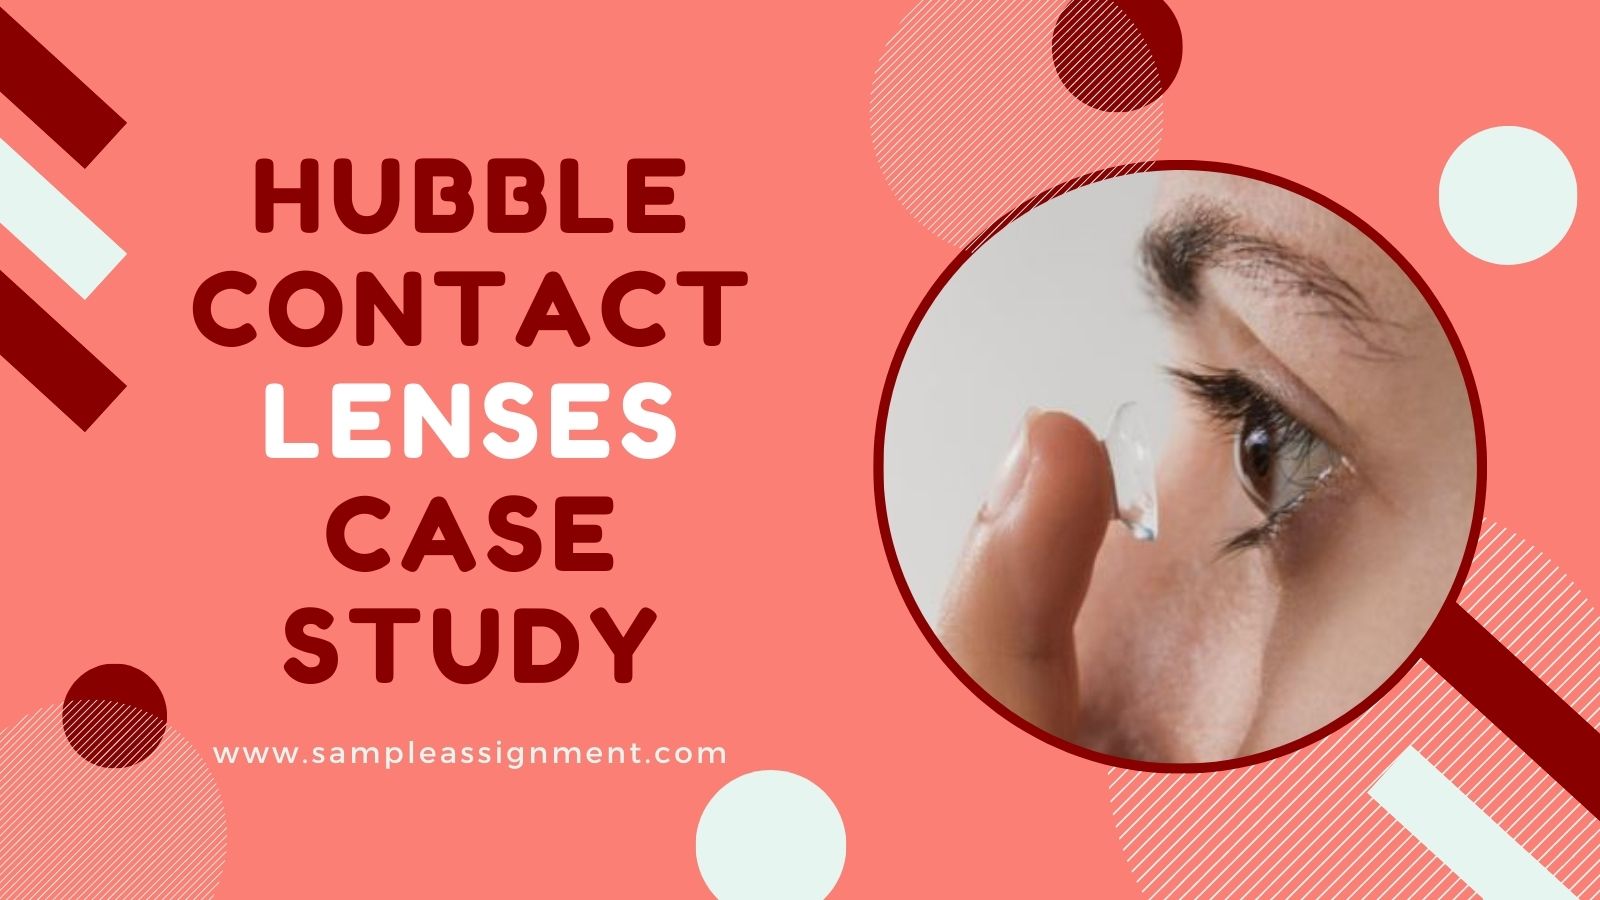 Hubble Contact Lenses Case Study Help